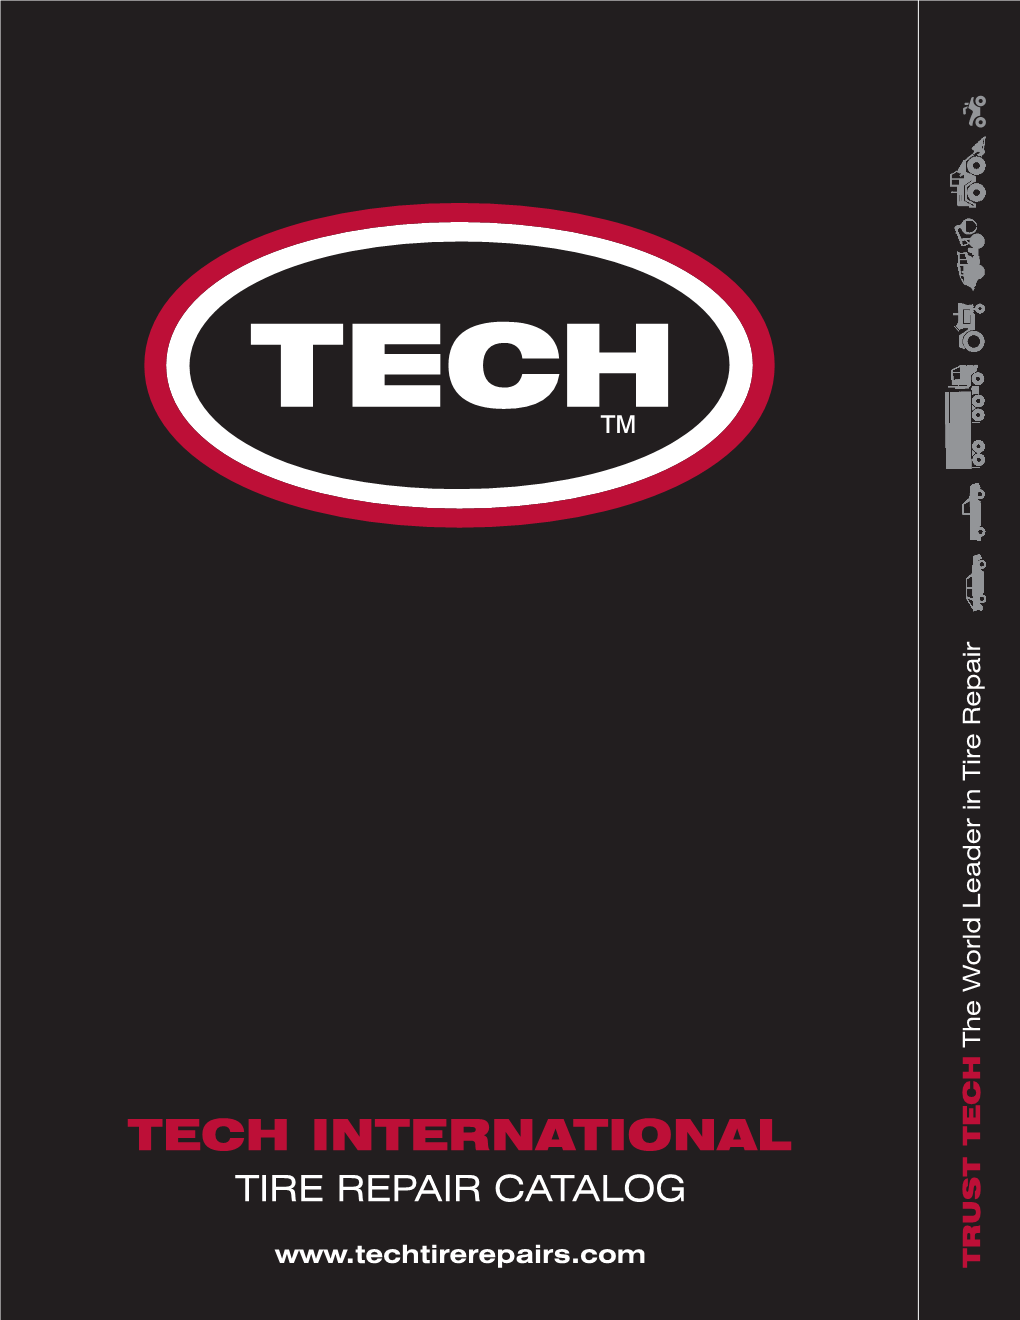 Tech International Tire Repair Catalog